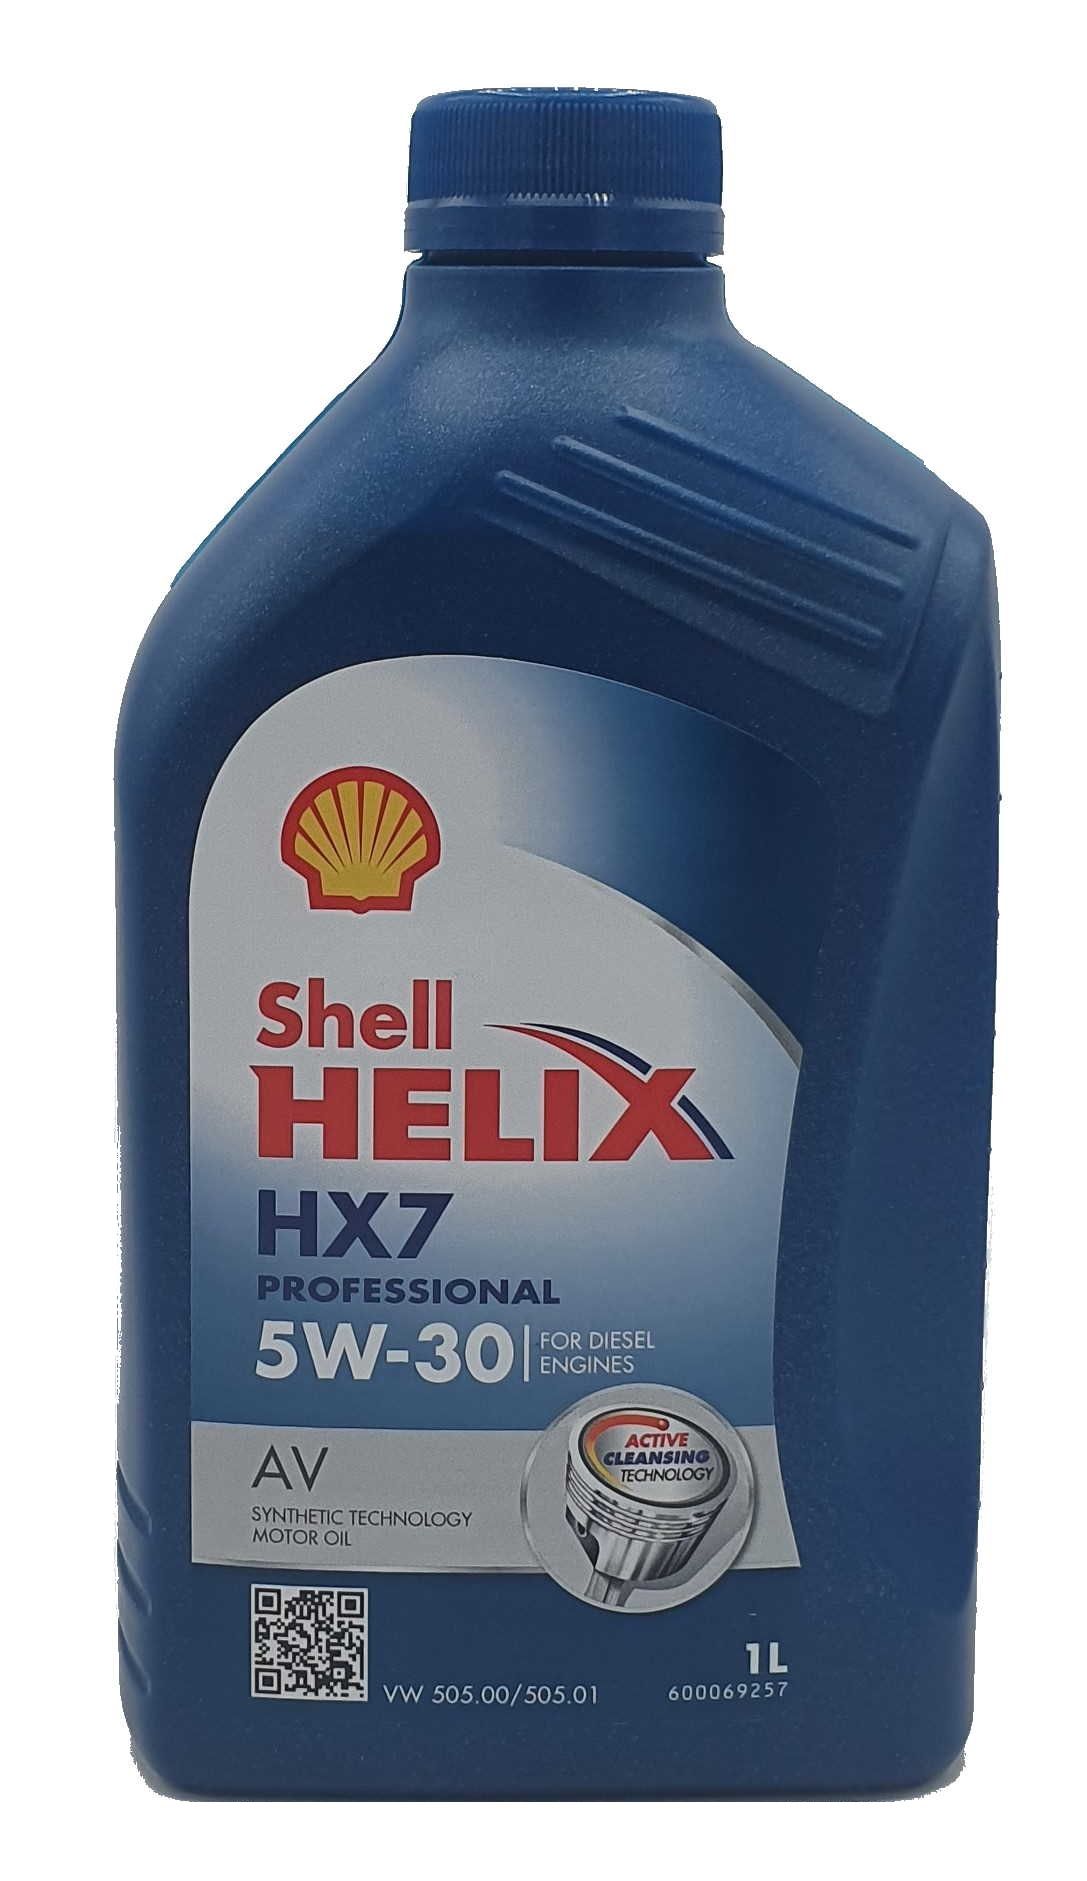 Shell Helix HX7 Professional AV 5W-30 1 Liter